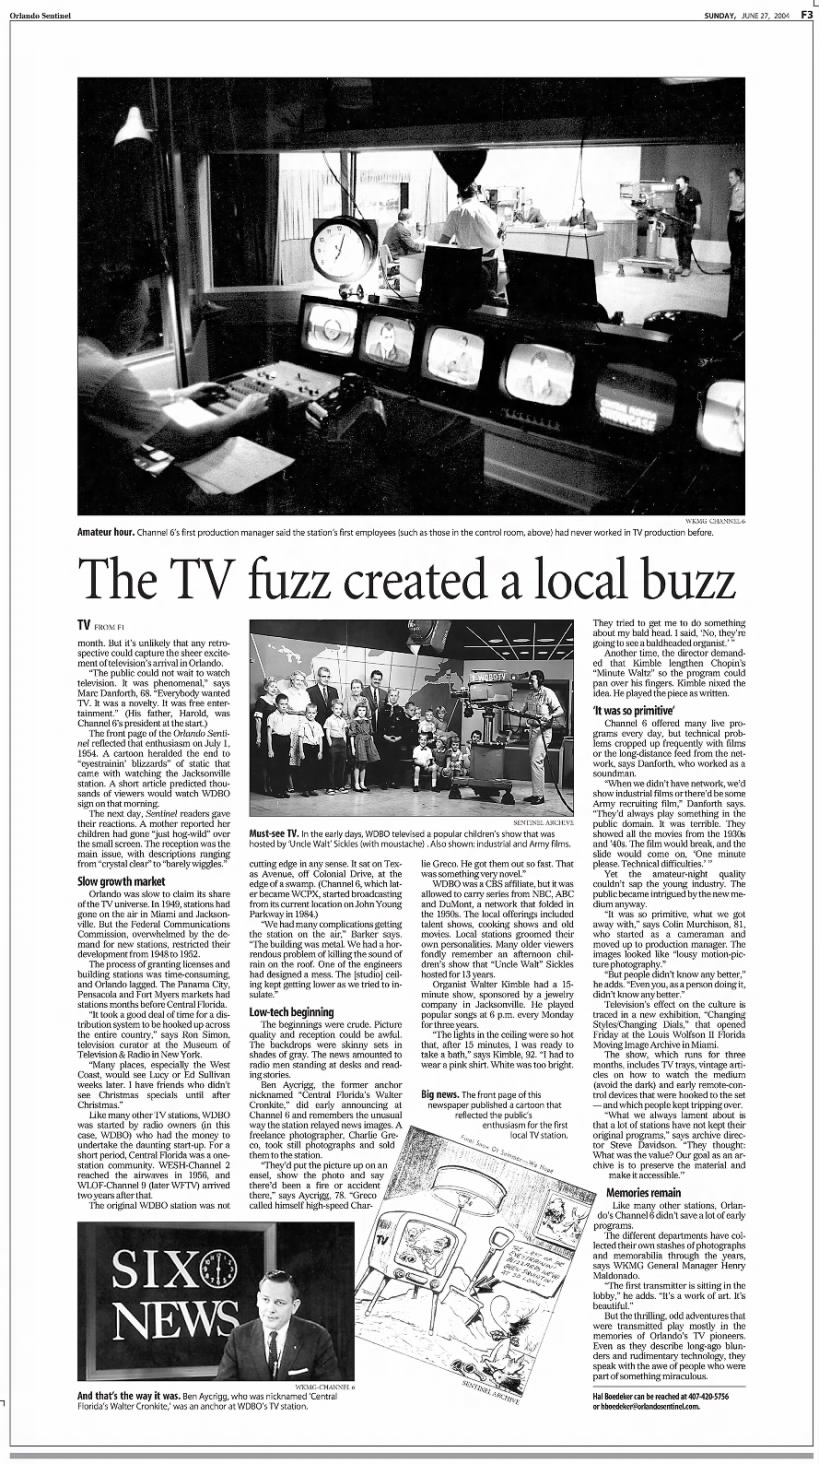 The TV fuzz created a local buzz